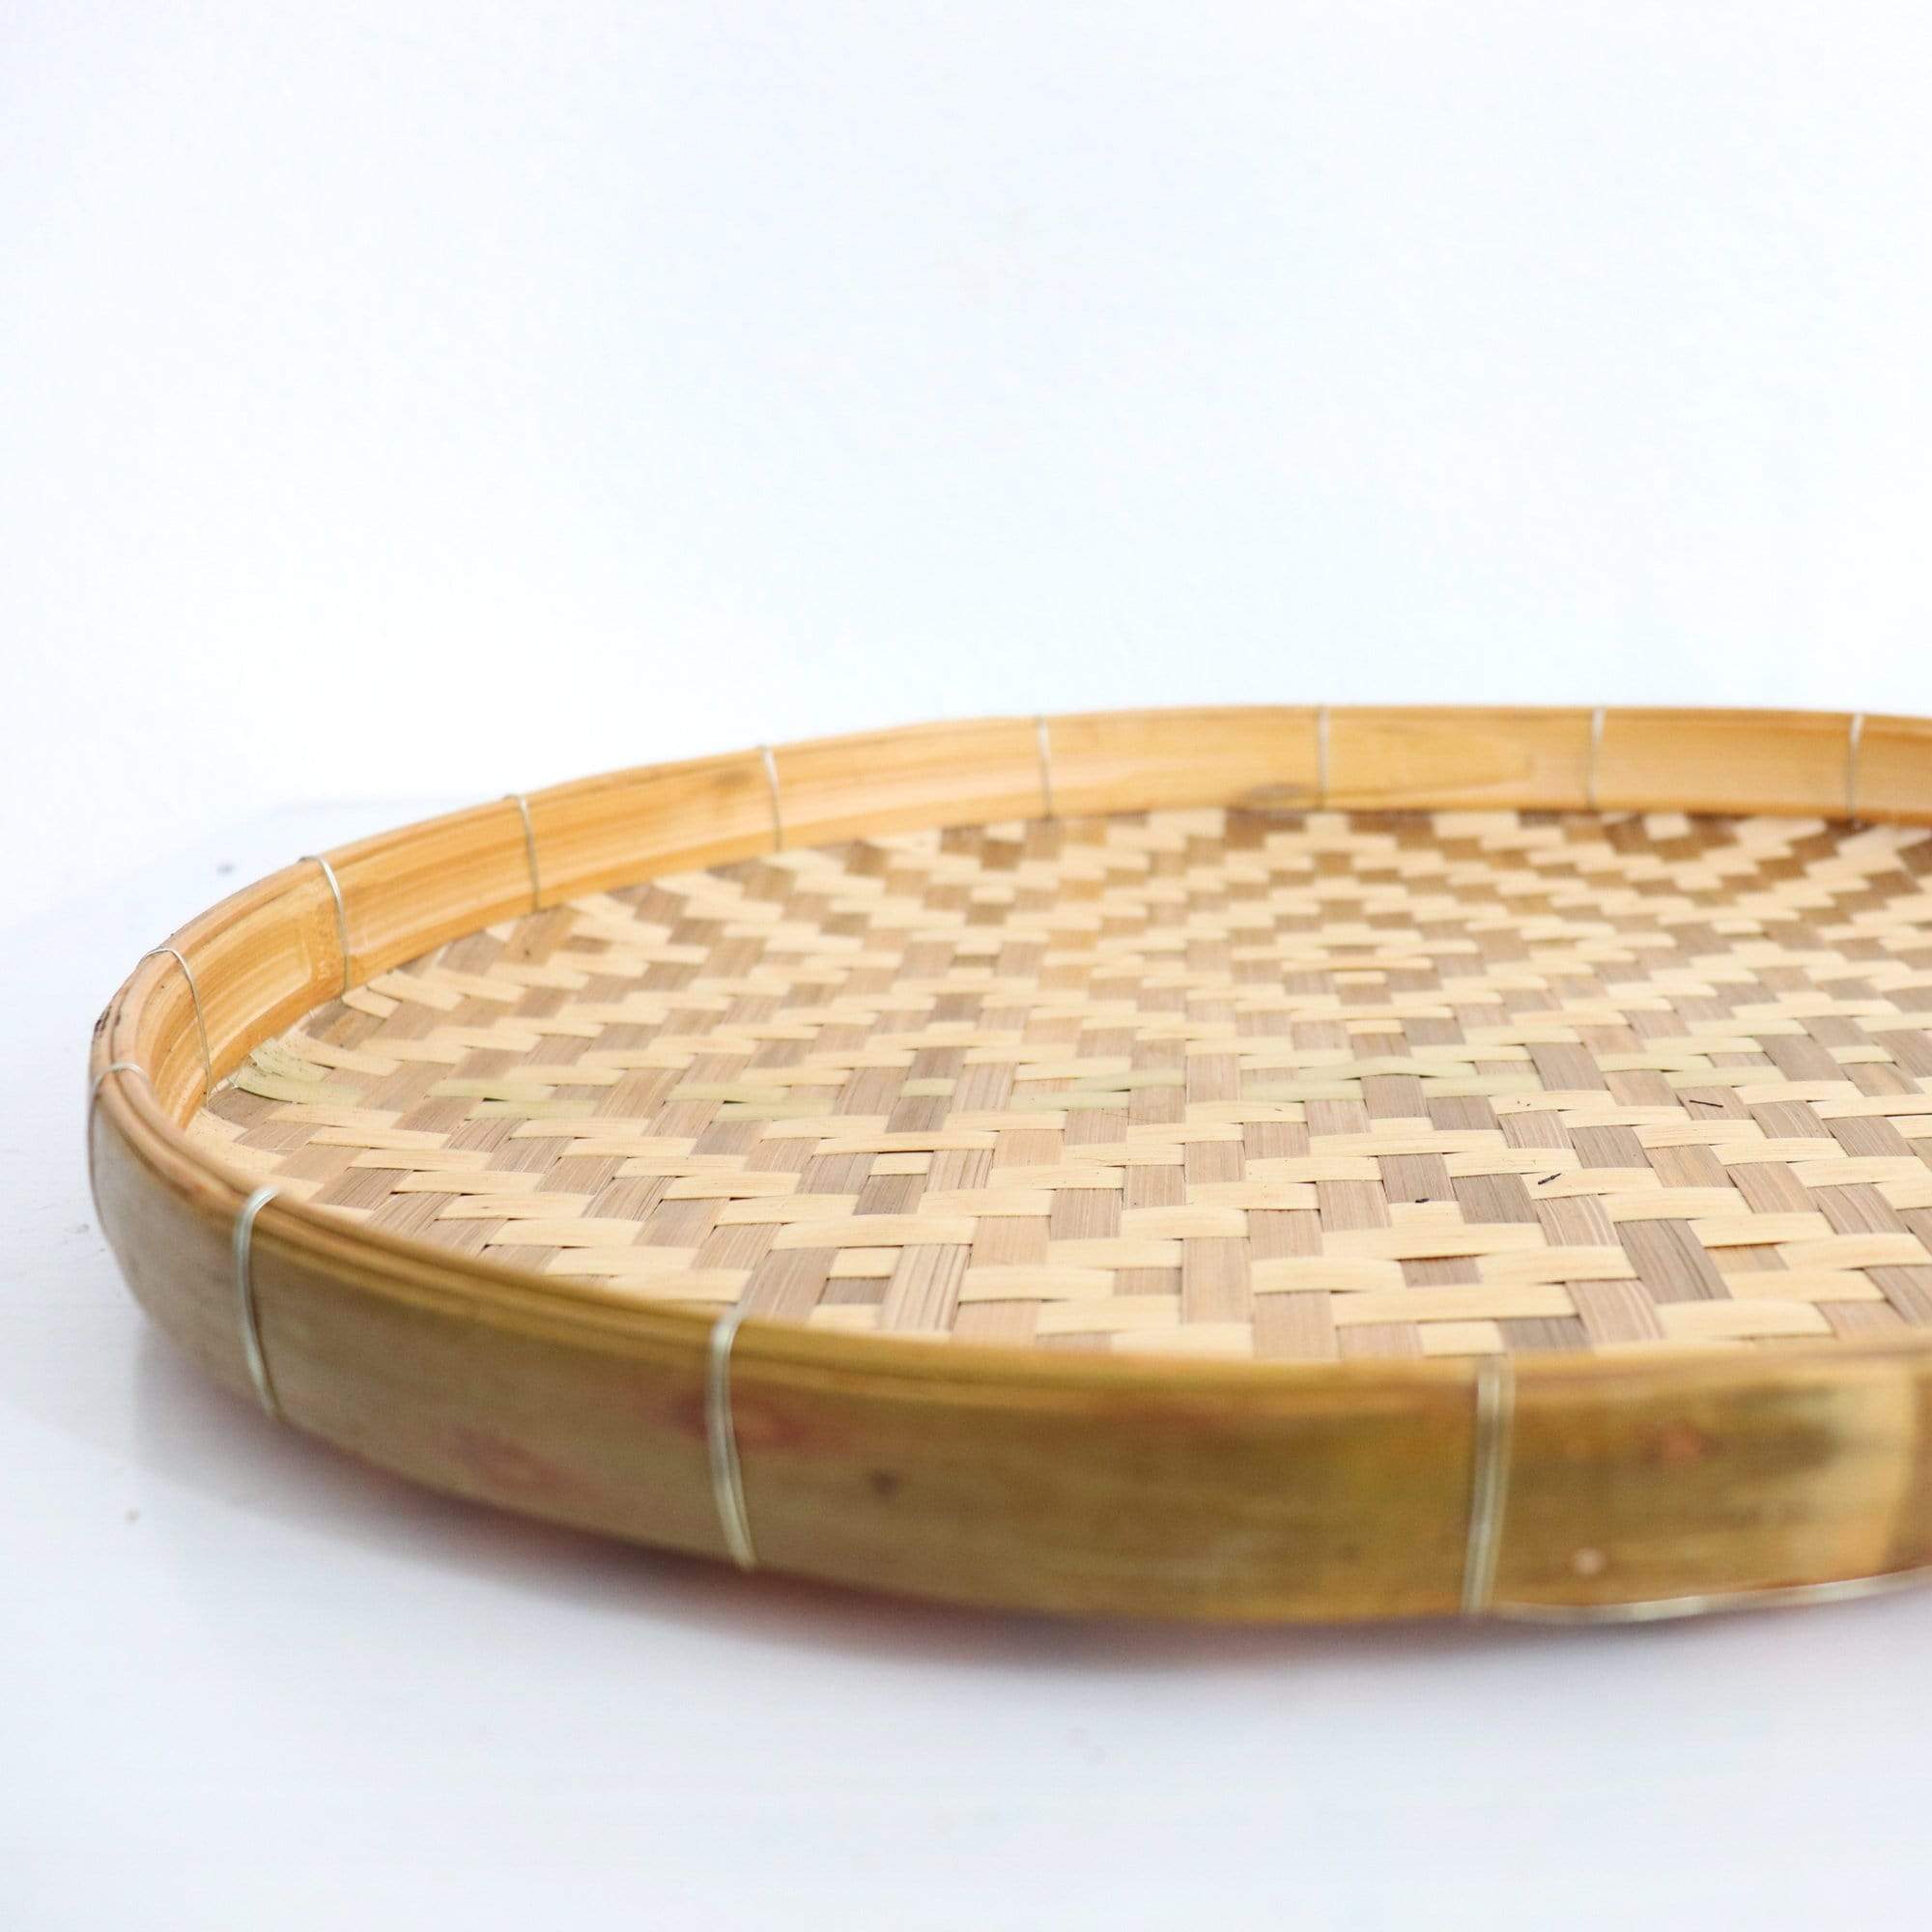 THAIHOMESHOP Baskets & Trays SUWANNEE - BAMBOO BASKET